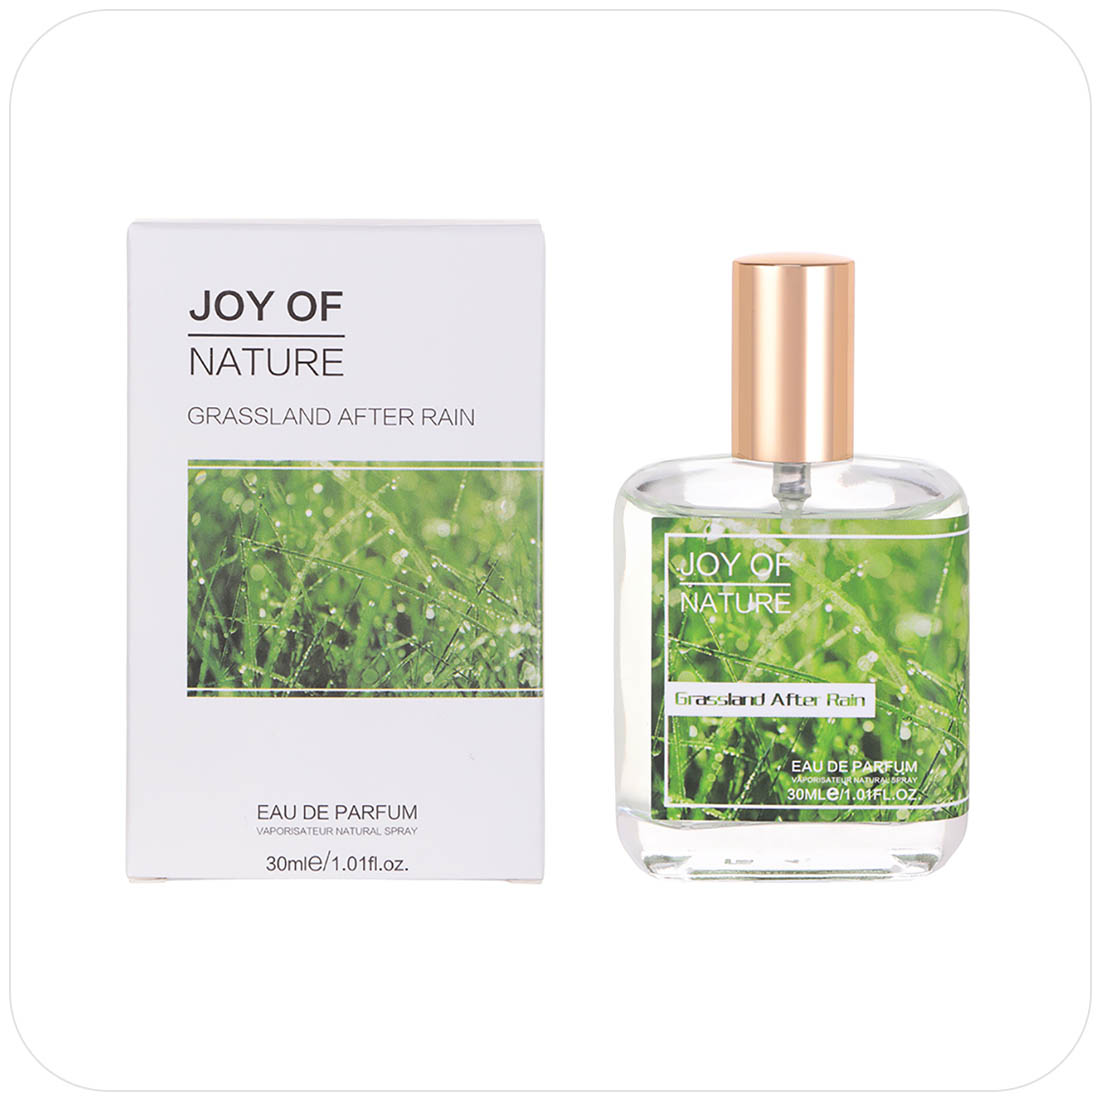 joy of nature perfume